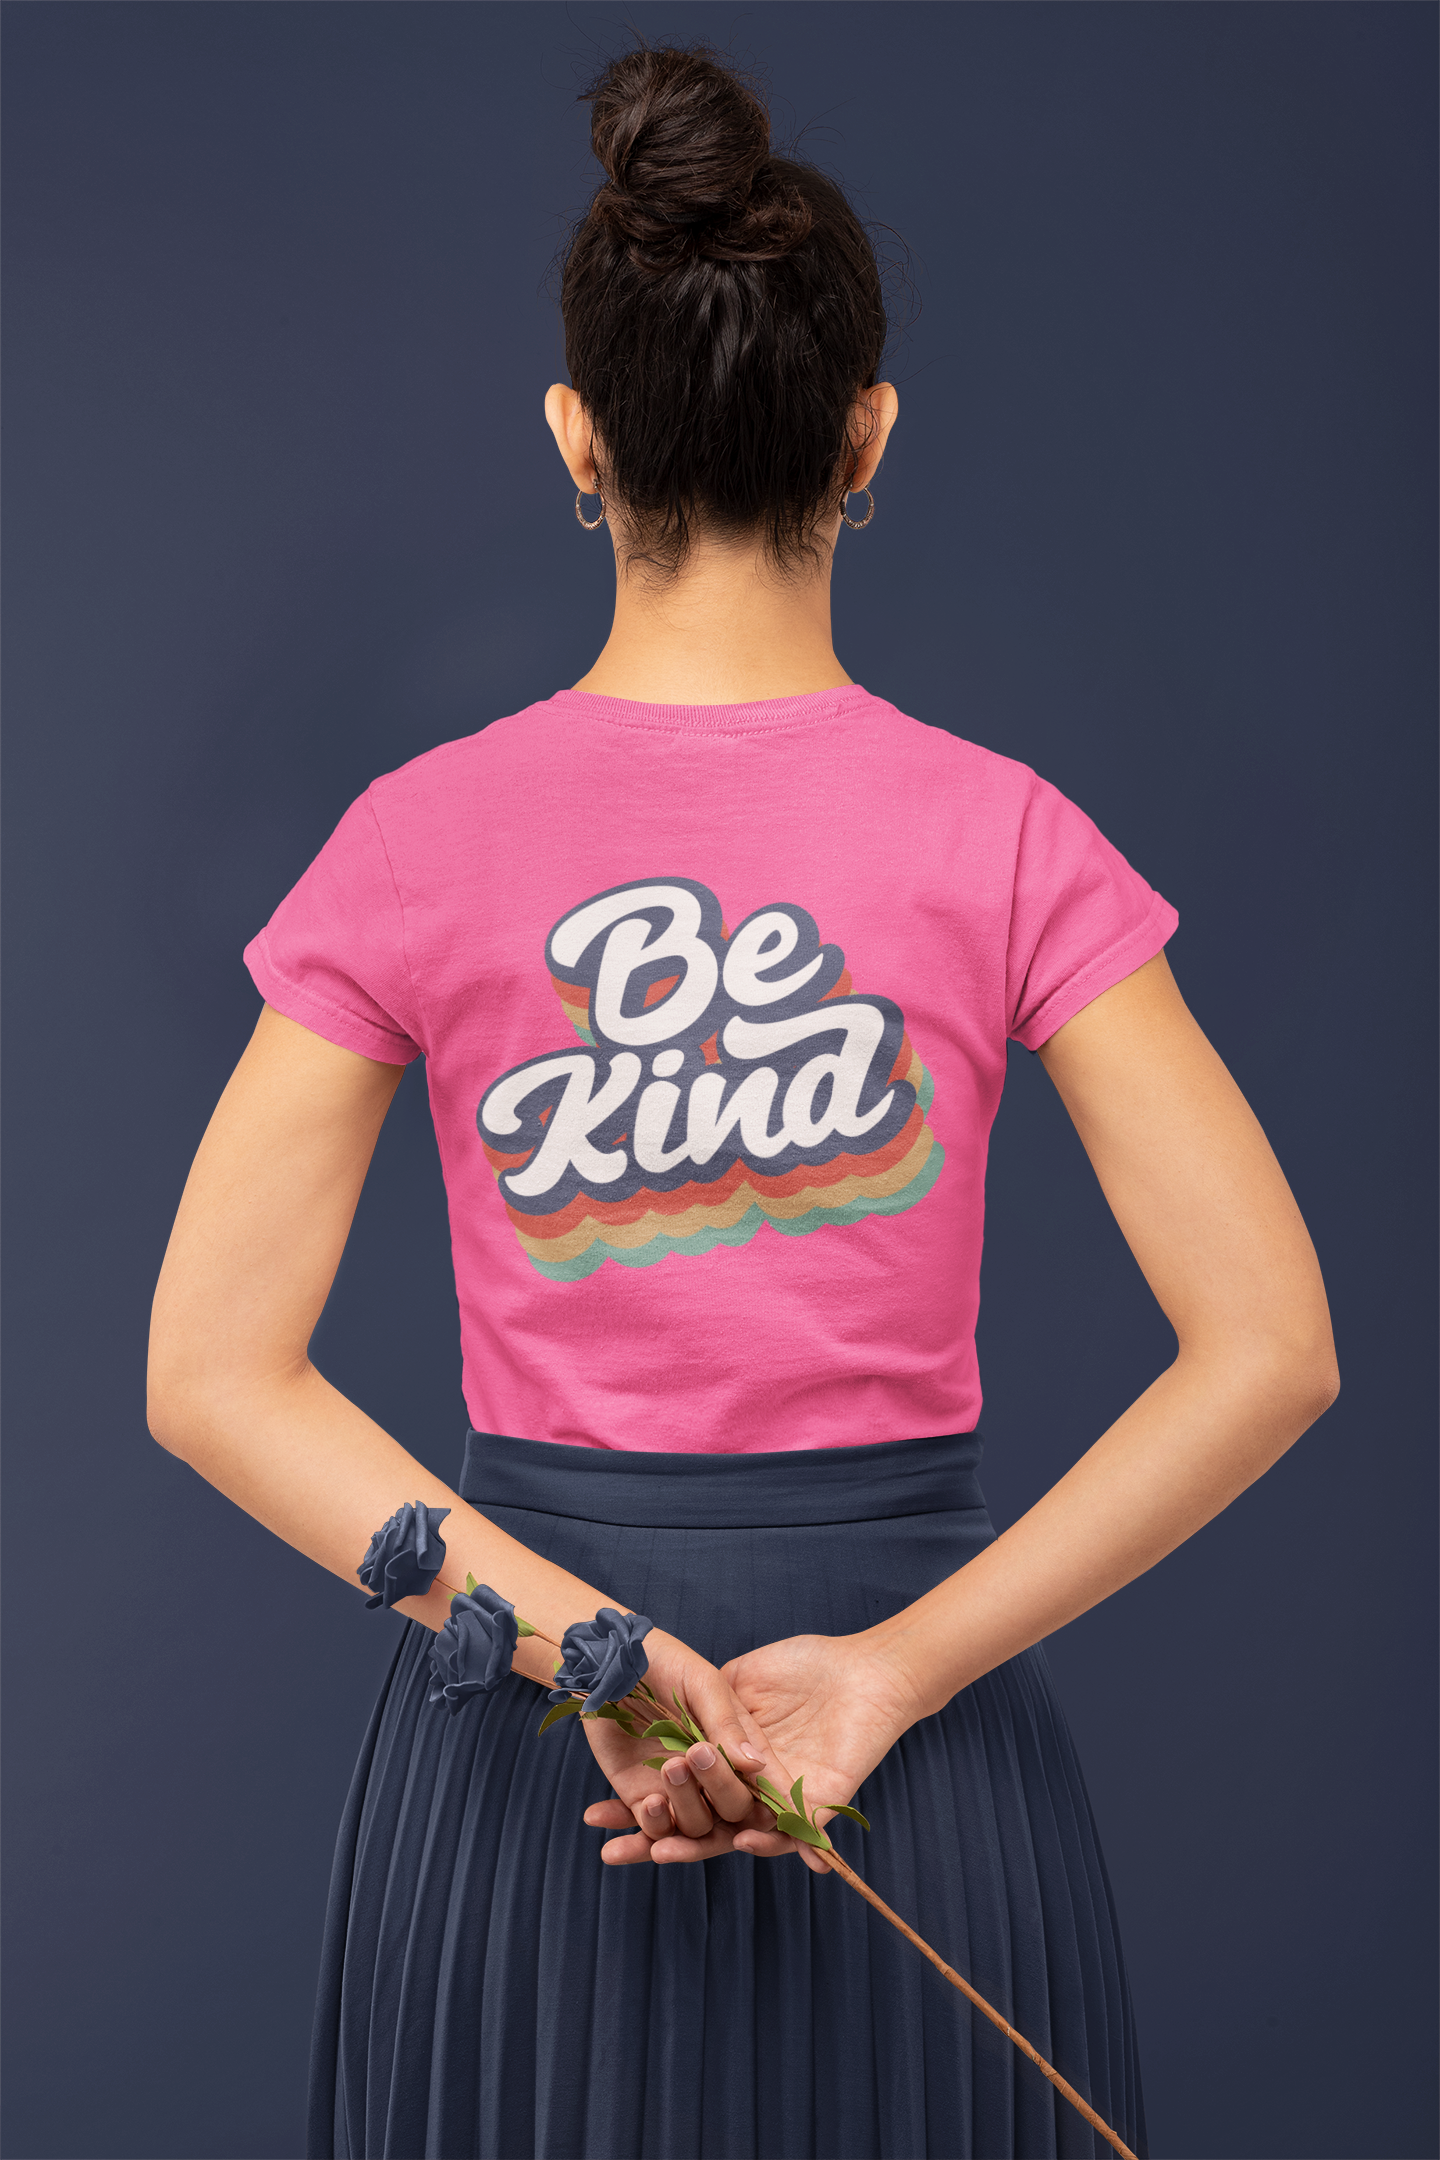 Be Kind (Print on back), Unisex 100% Premium Comfy Cotton, T-Shirt by Bella+Canvas